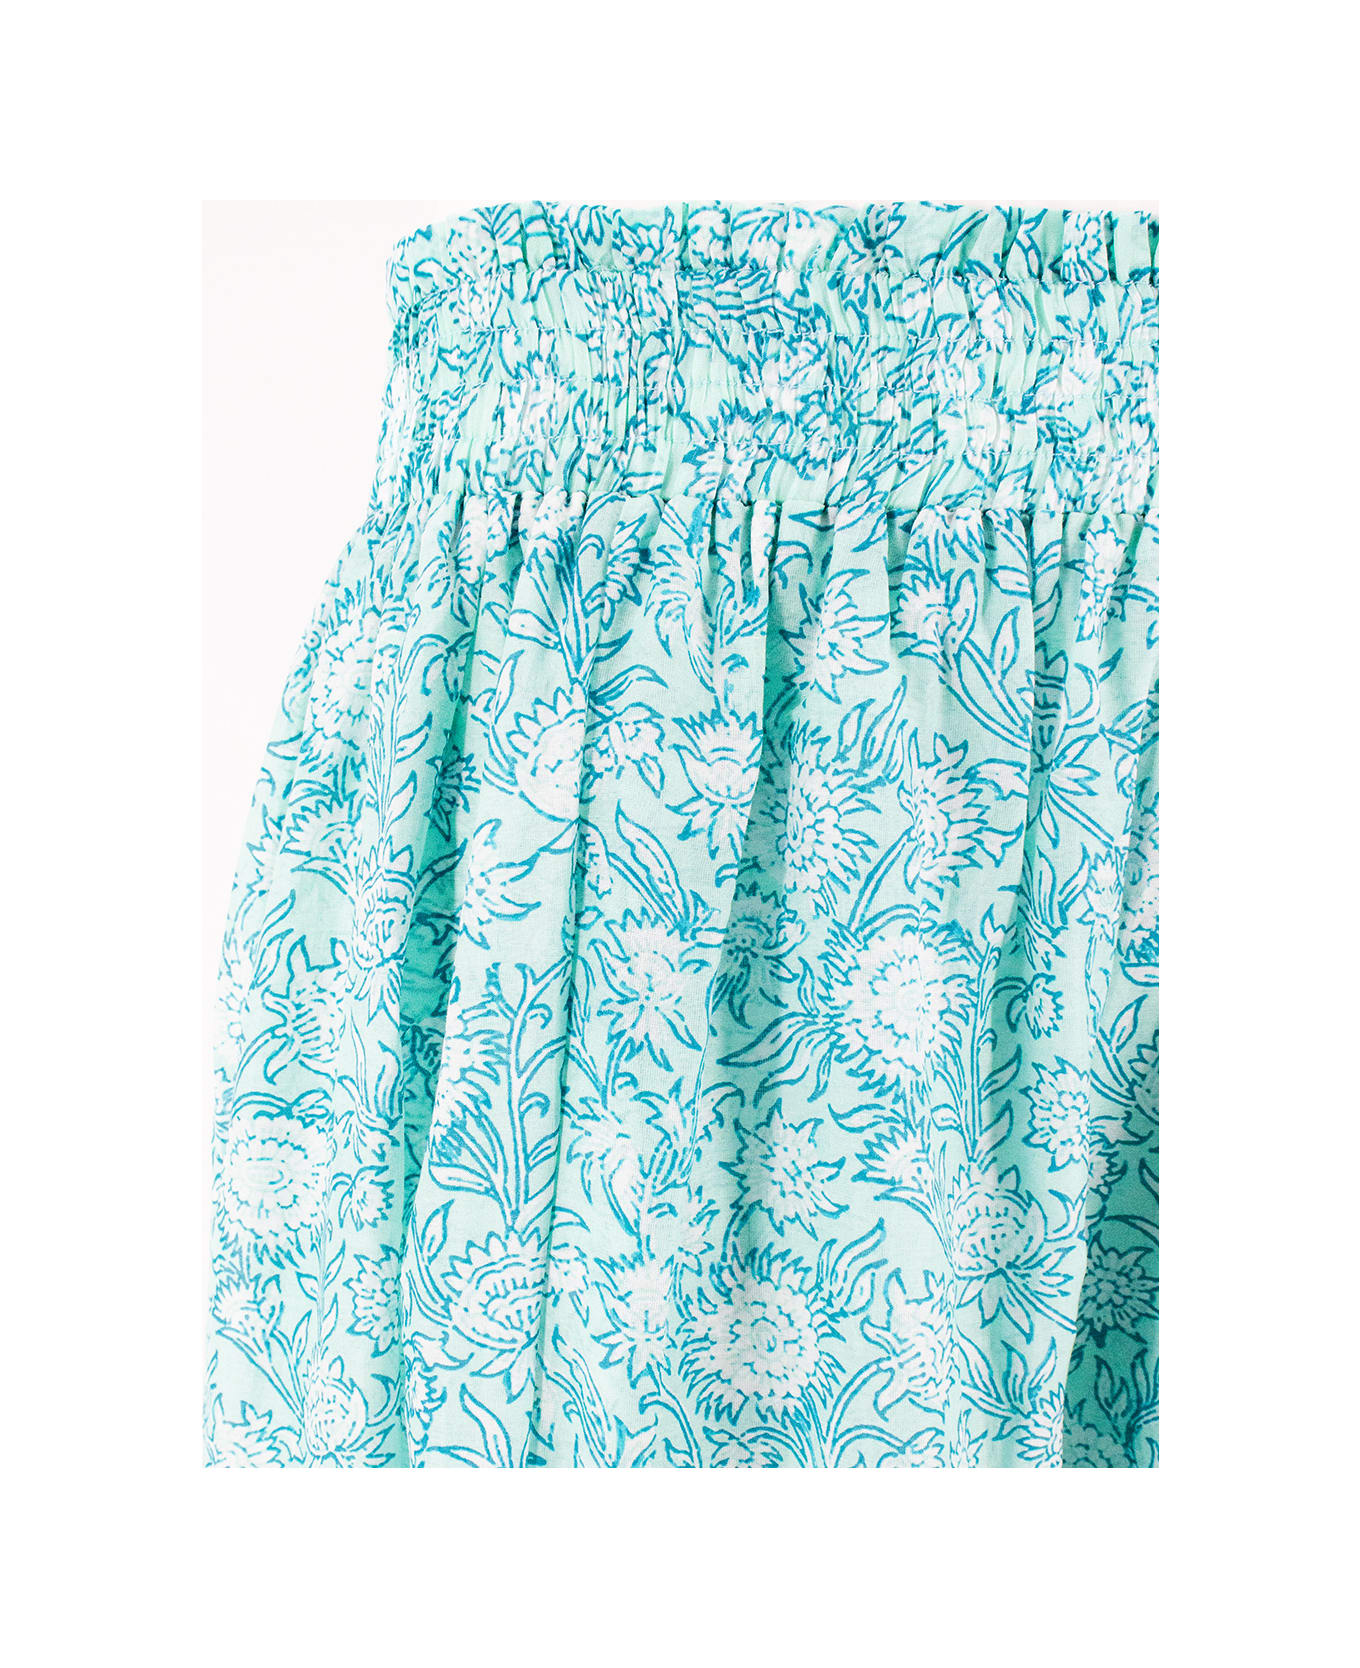 MC2 Saint Barth Skirt - SILK VOILE ARABESQUE 56 スカート